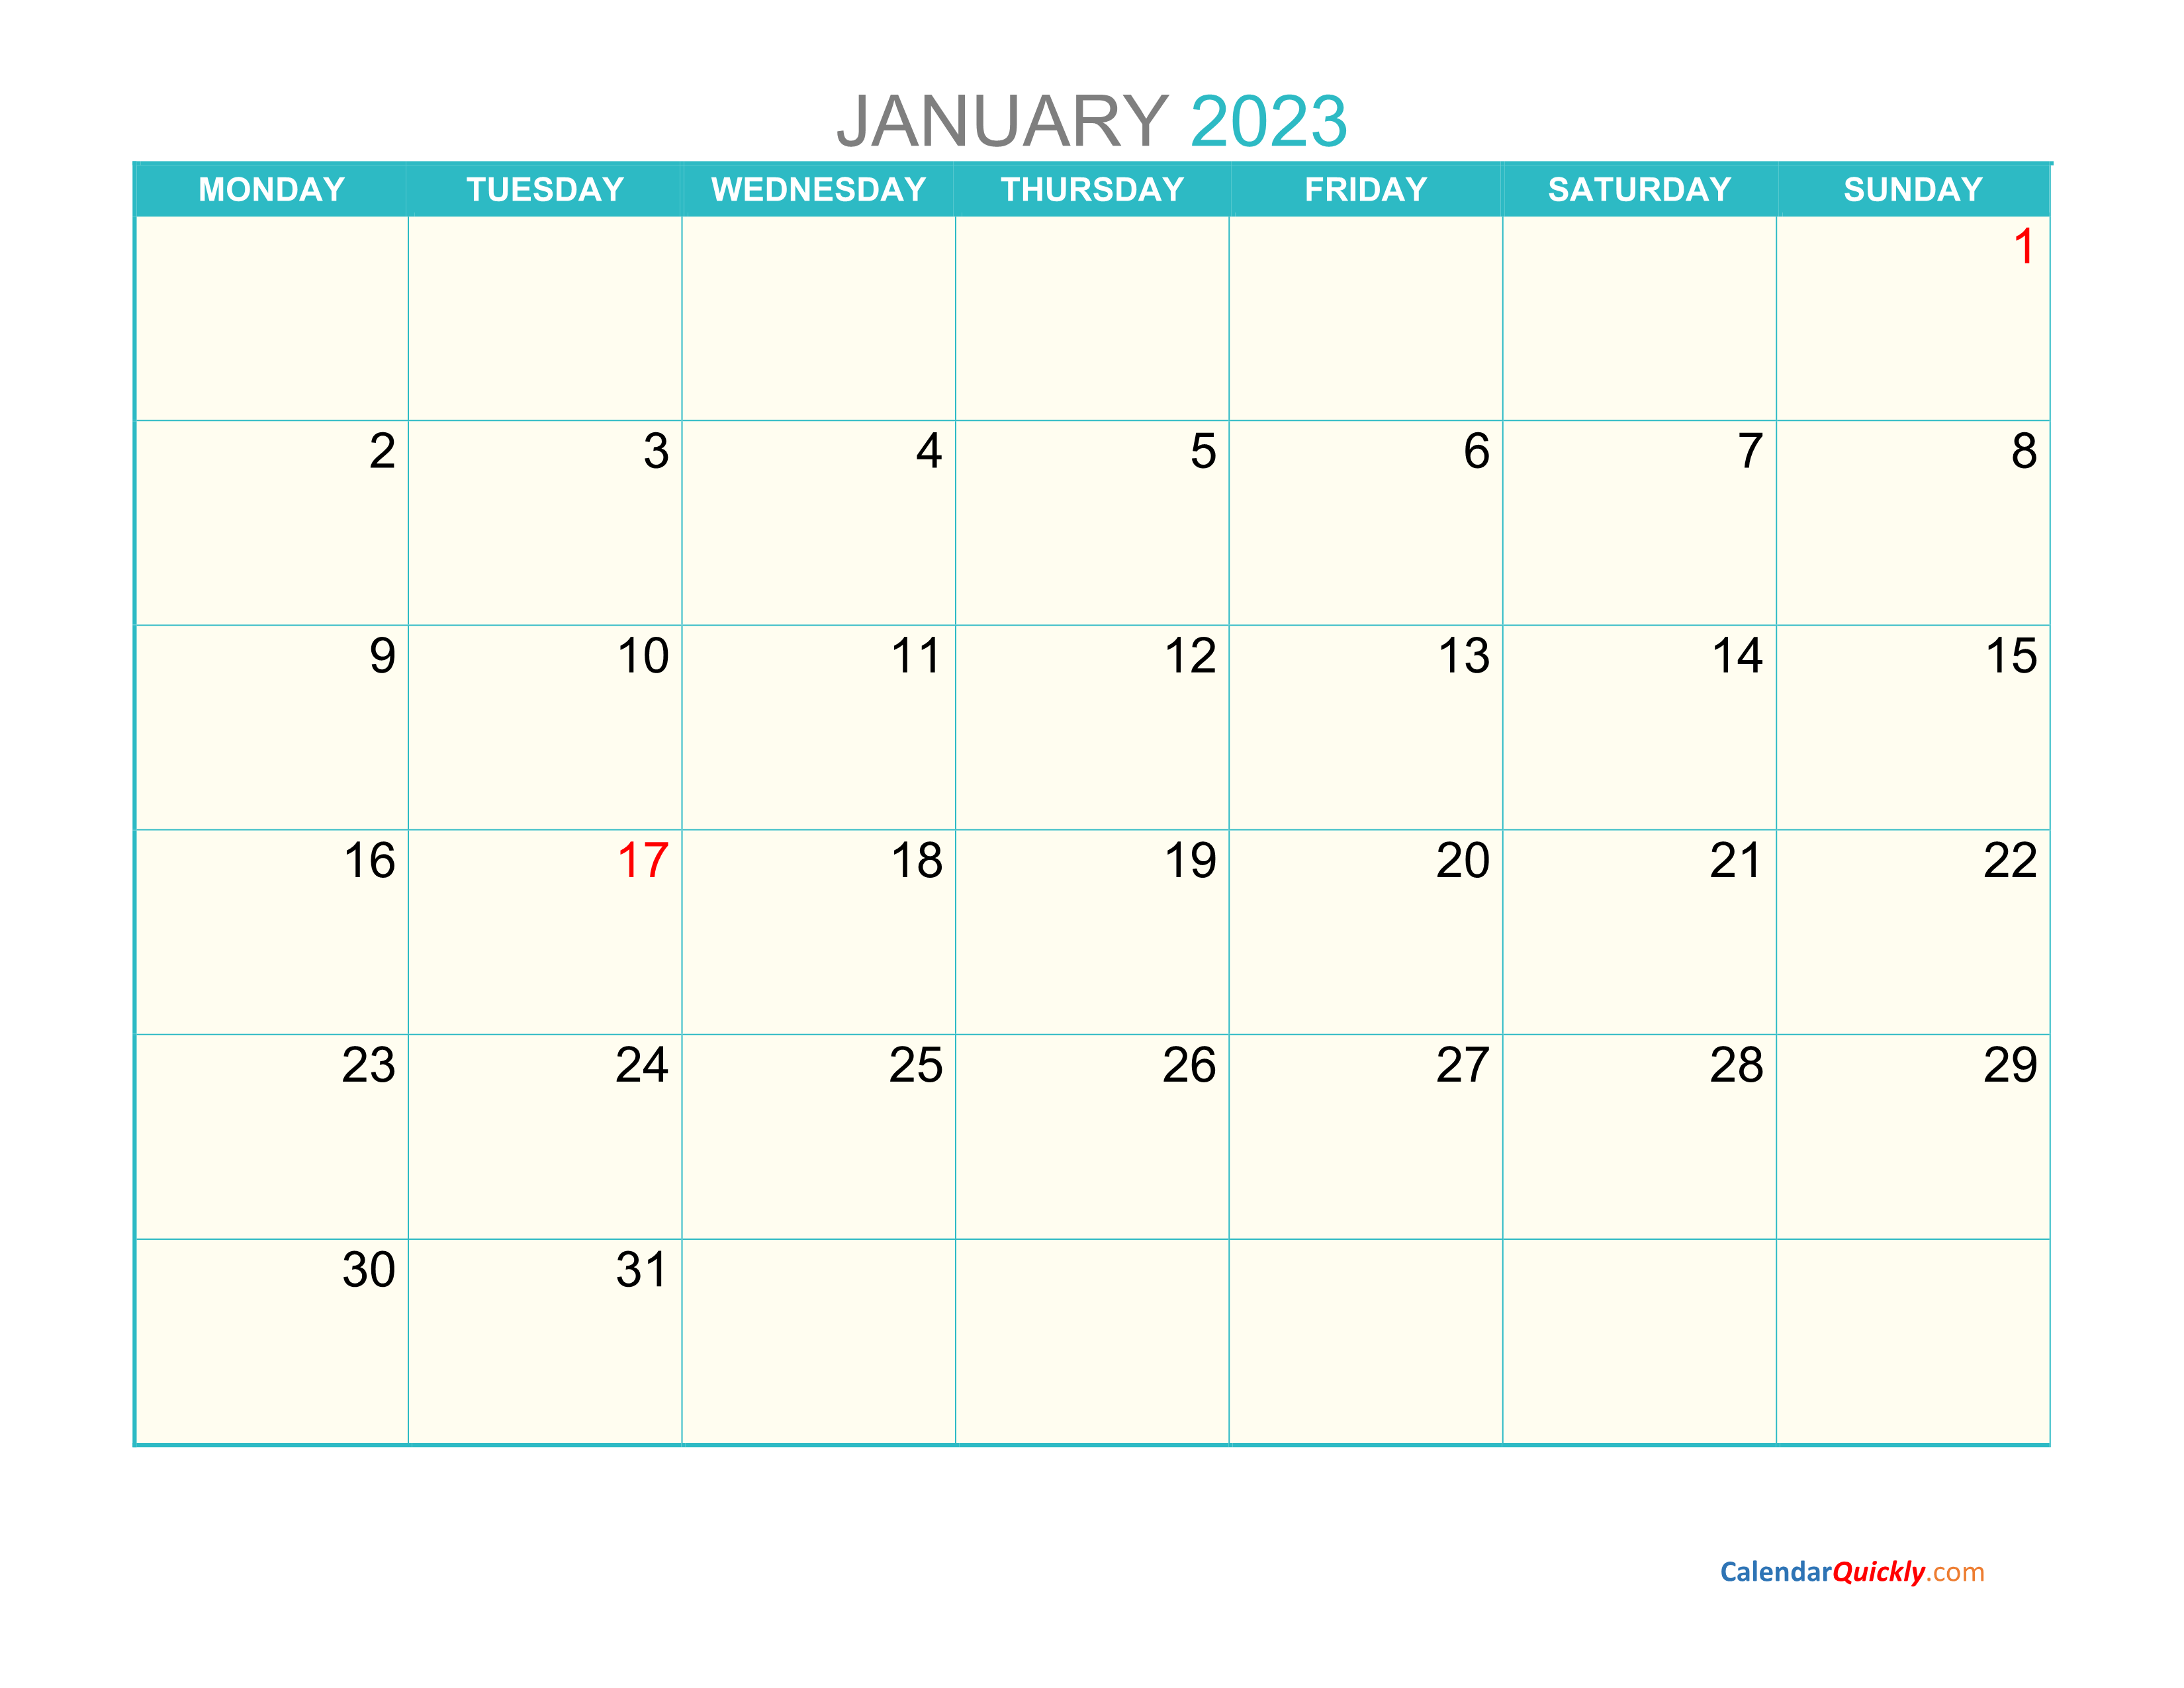 2023 Calendar Calendar Quickly Riset